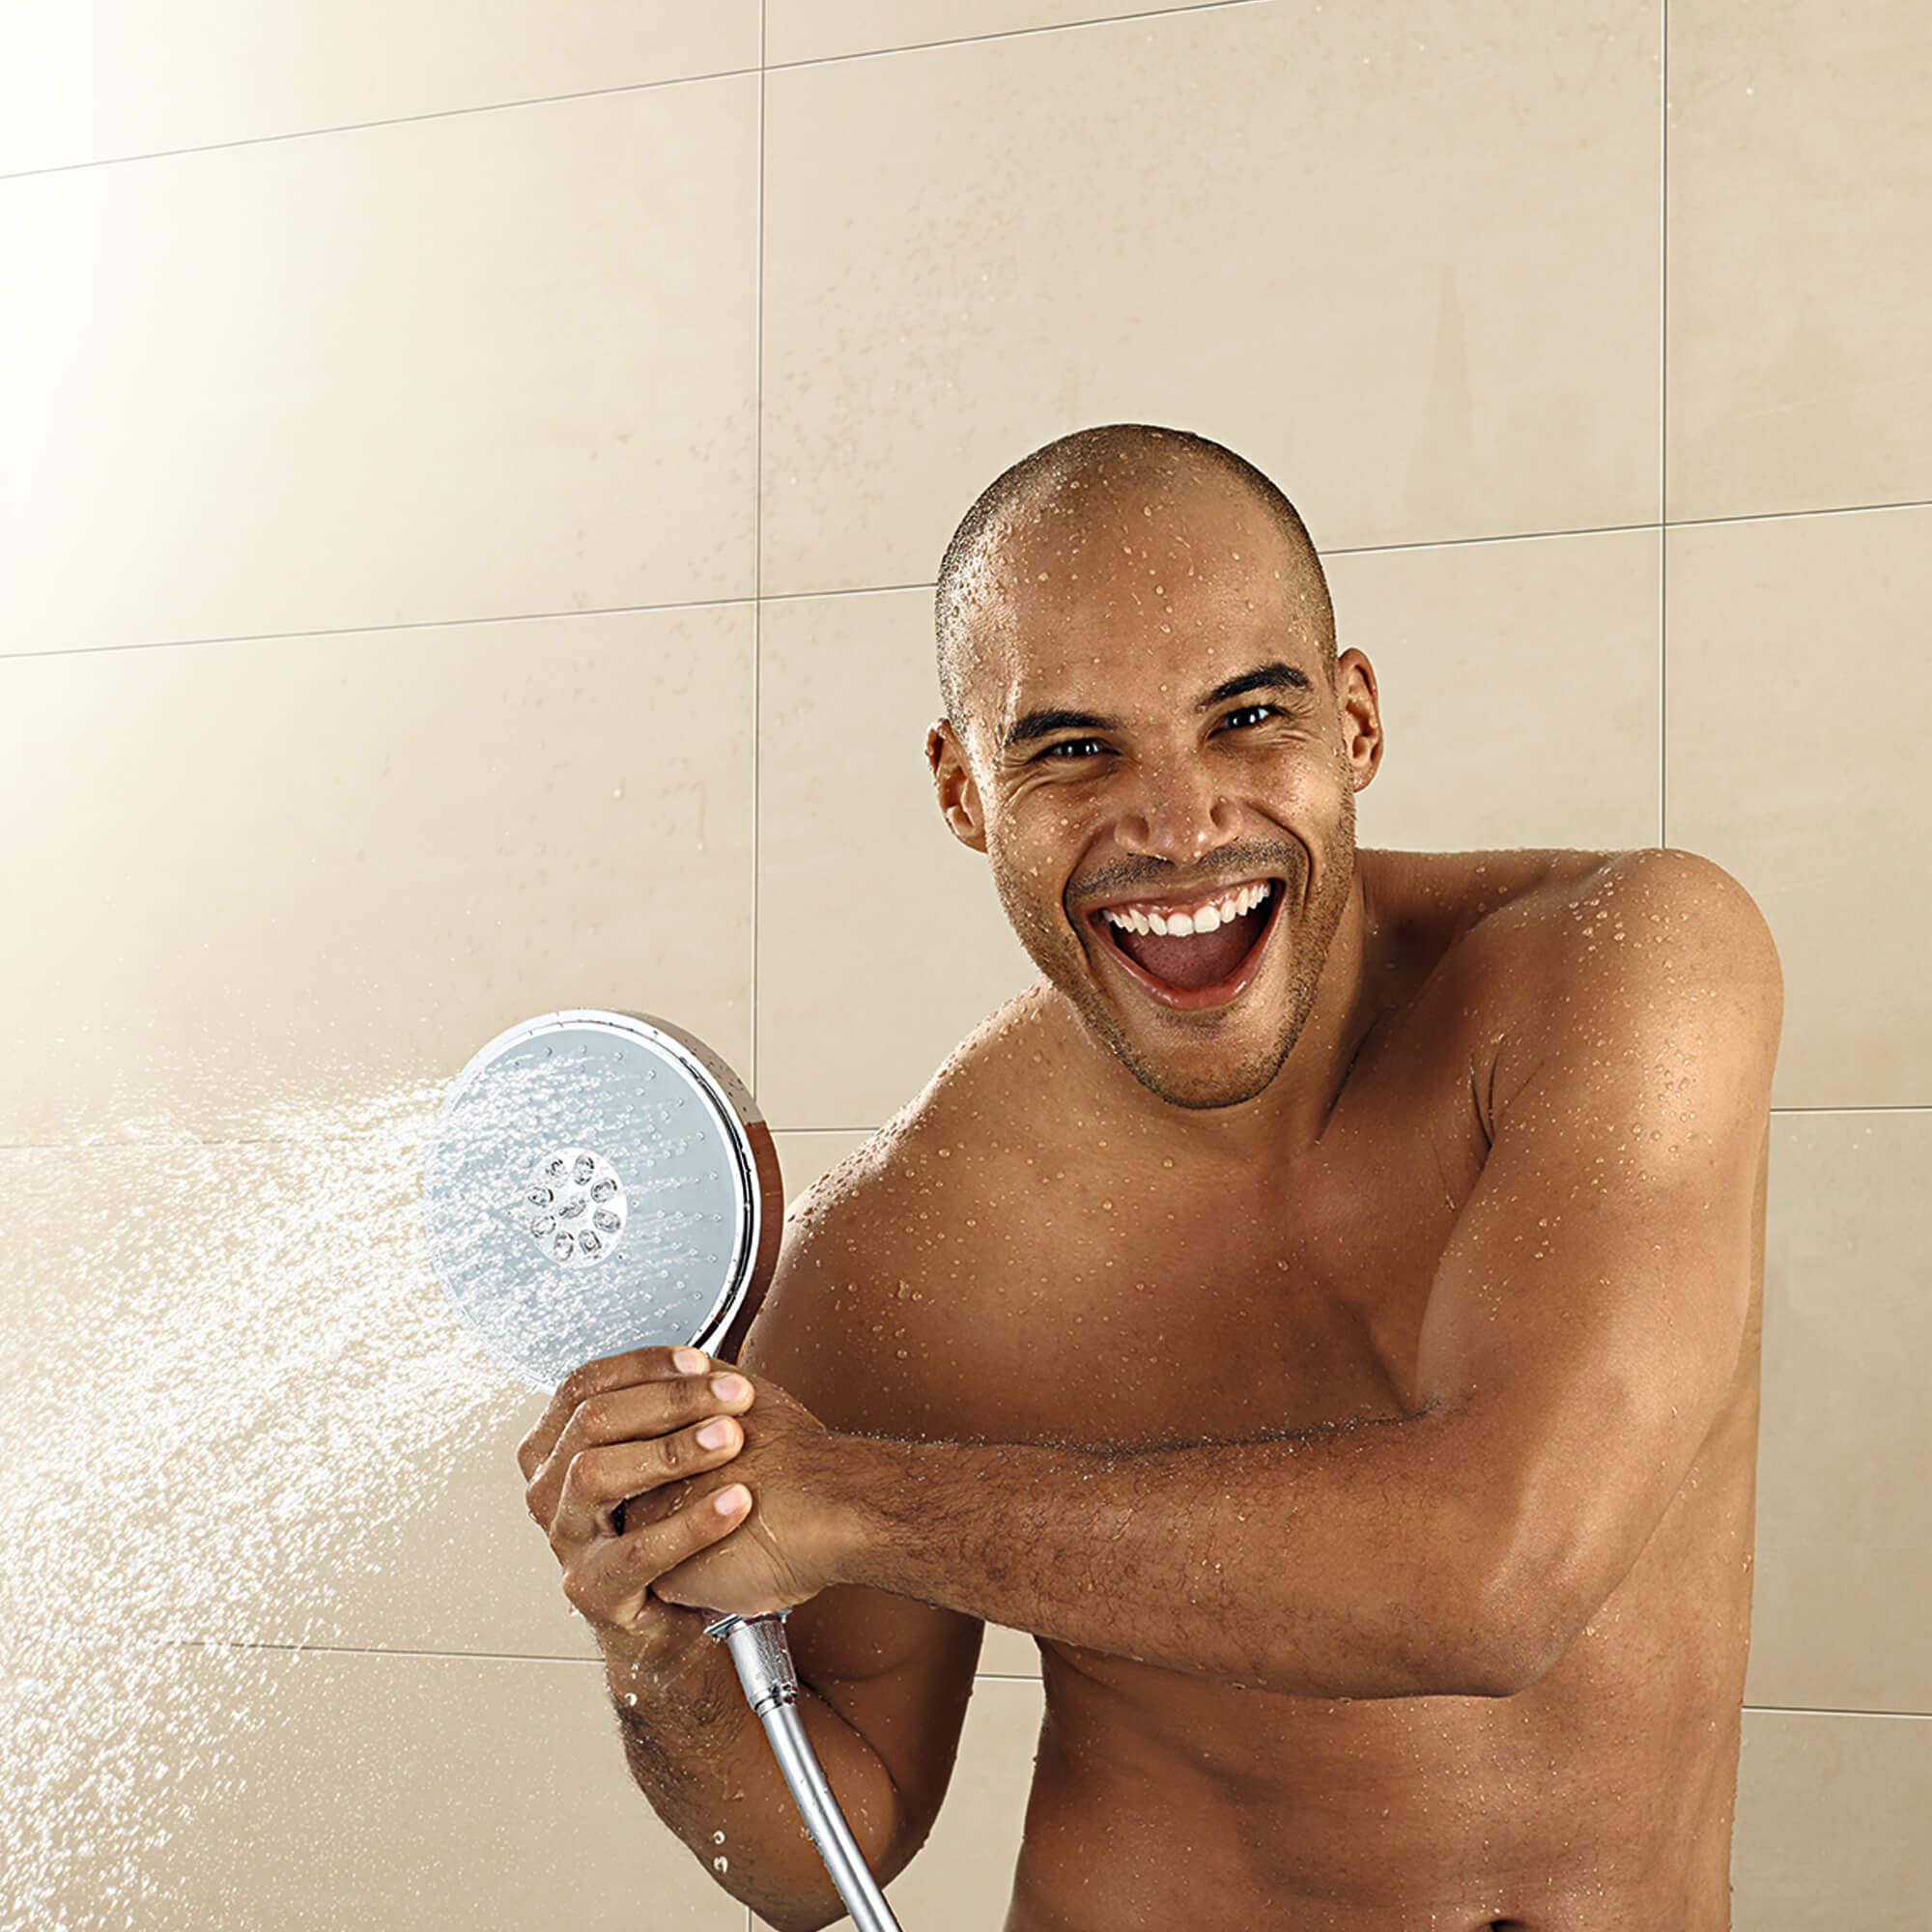 man spraying water using handheld showerhead